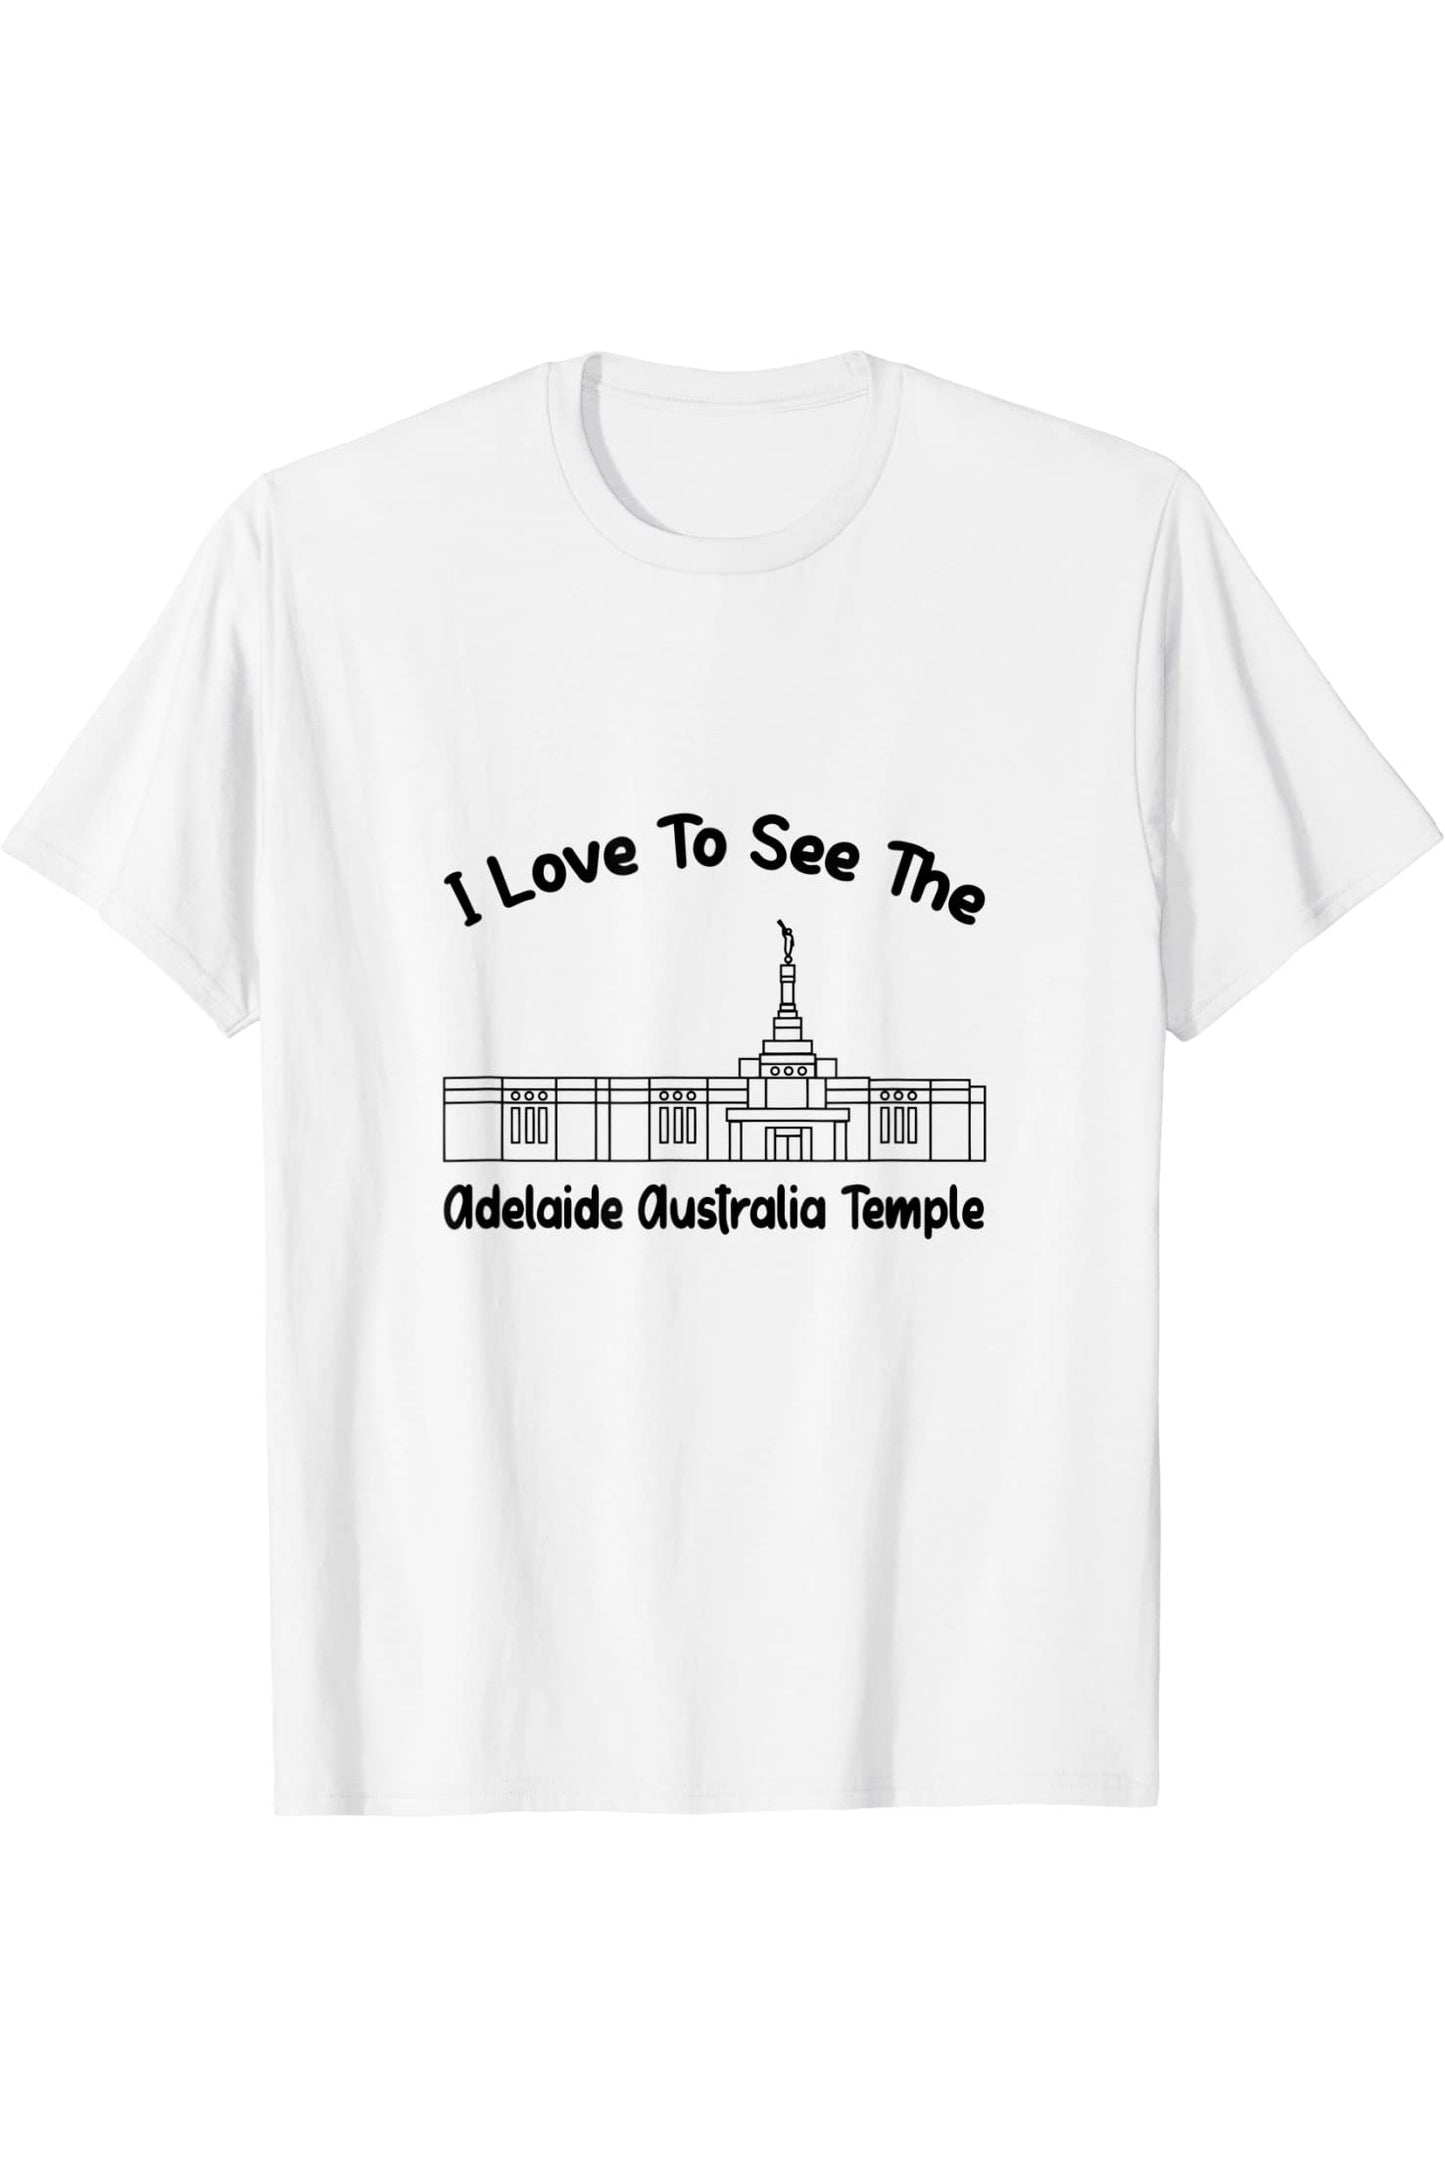 Adelaide Australia Temple T-Shirt - Primary Style (English) US